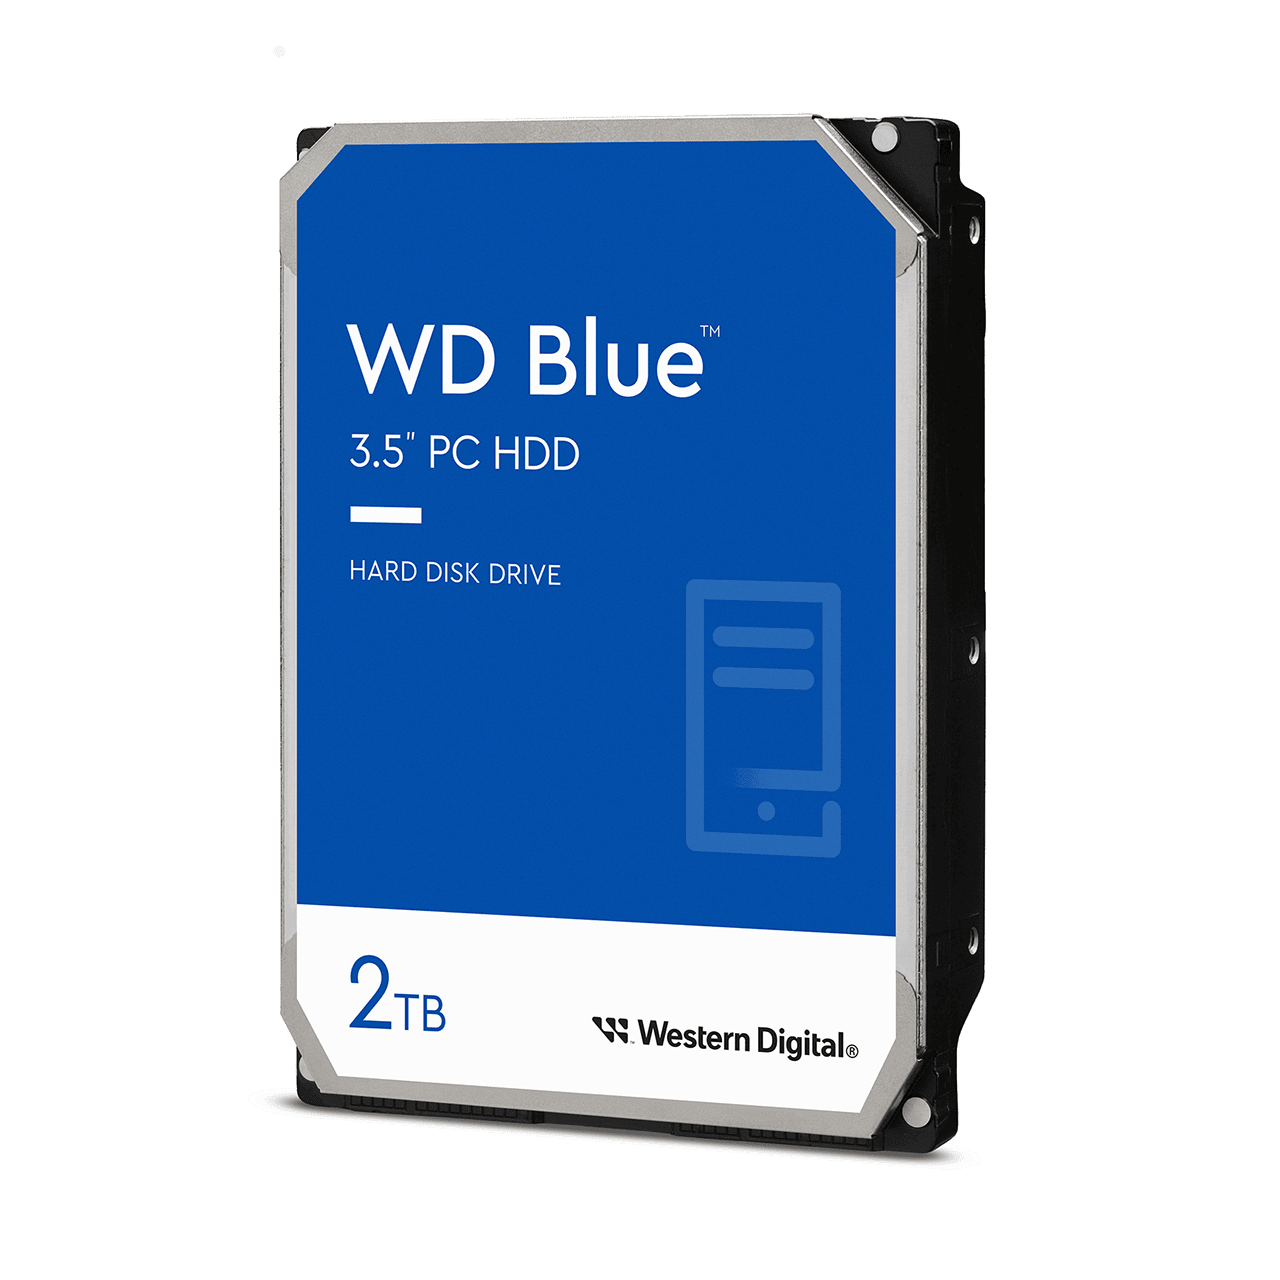 WD Blue 3.5in PC Hard Drive - 2TB - Image5